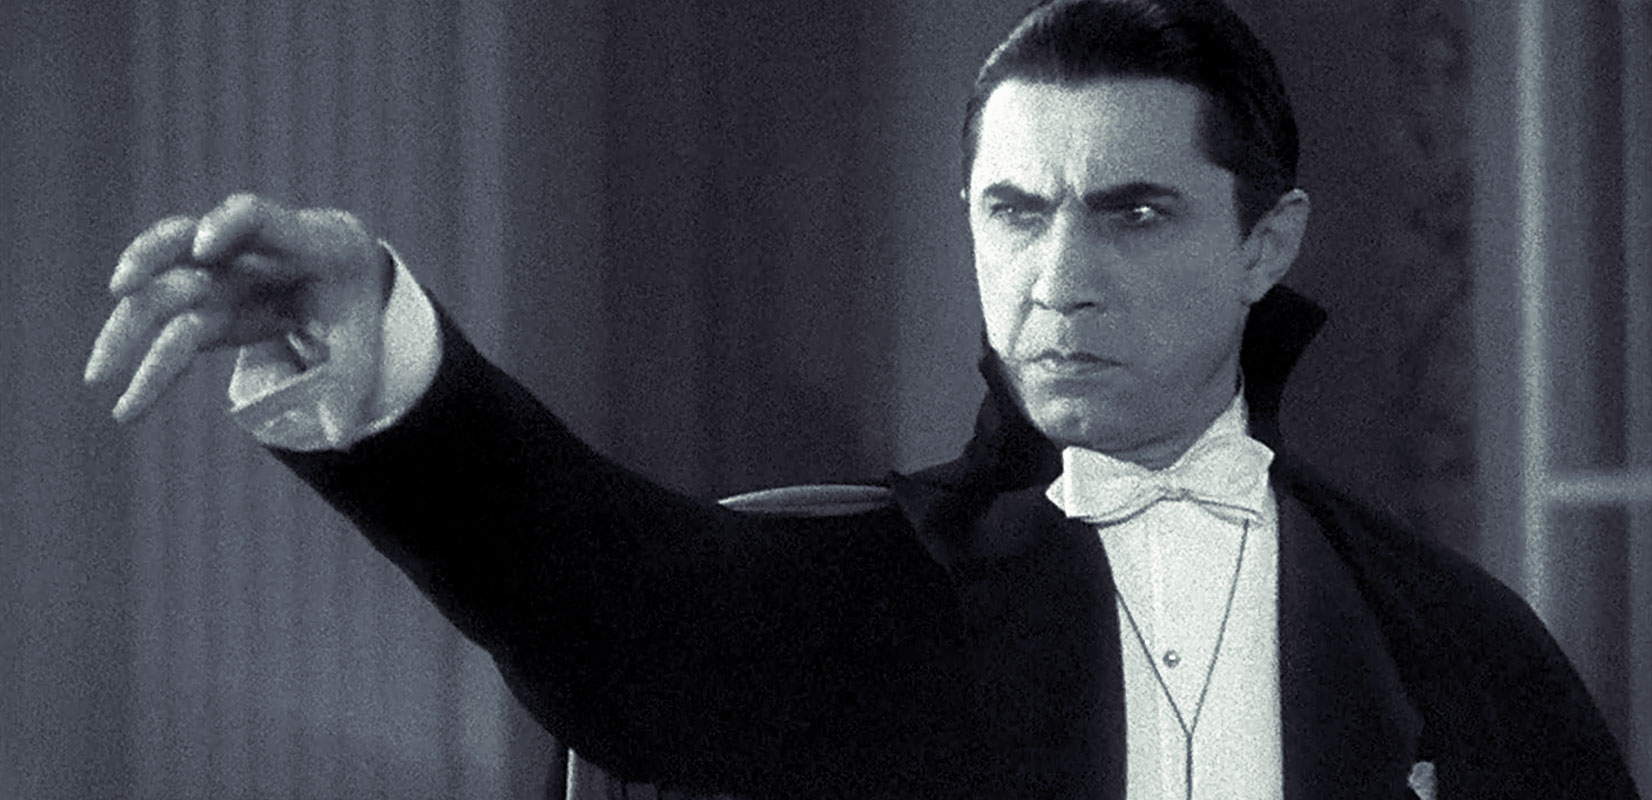 Universal Classic Monsters - Dracula - Bela Lugosi